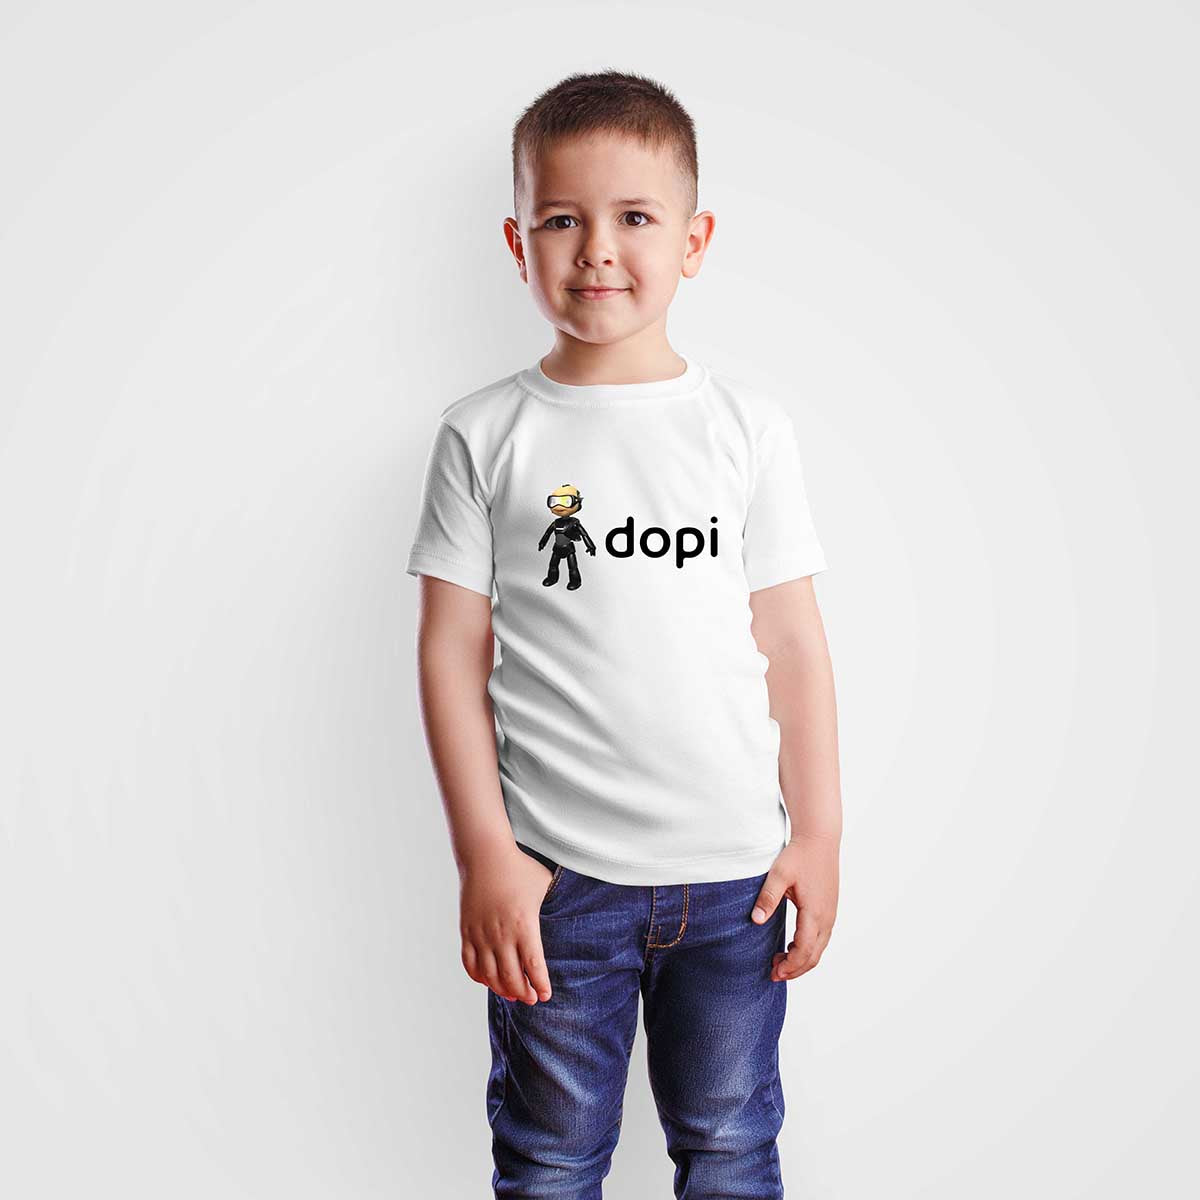 Dopi White Shirt for Kids